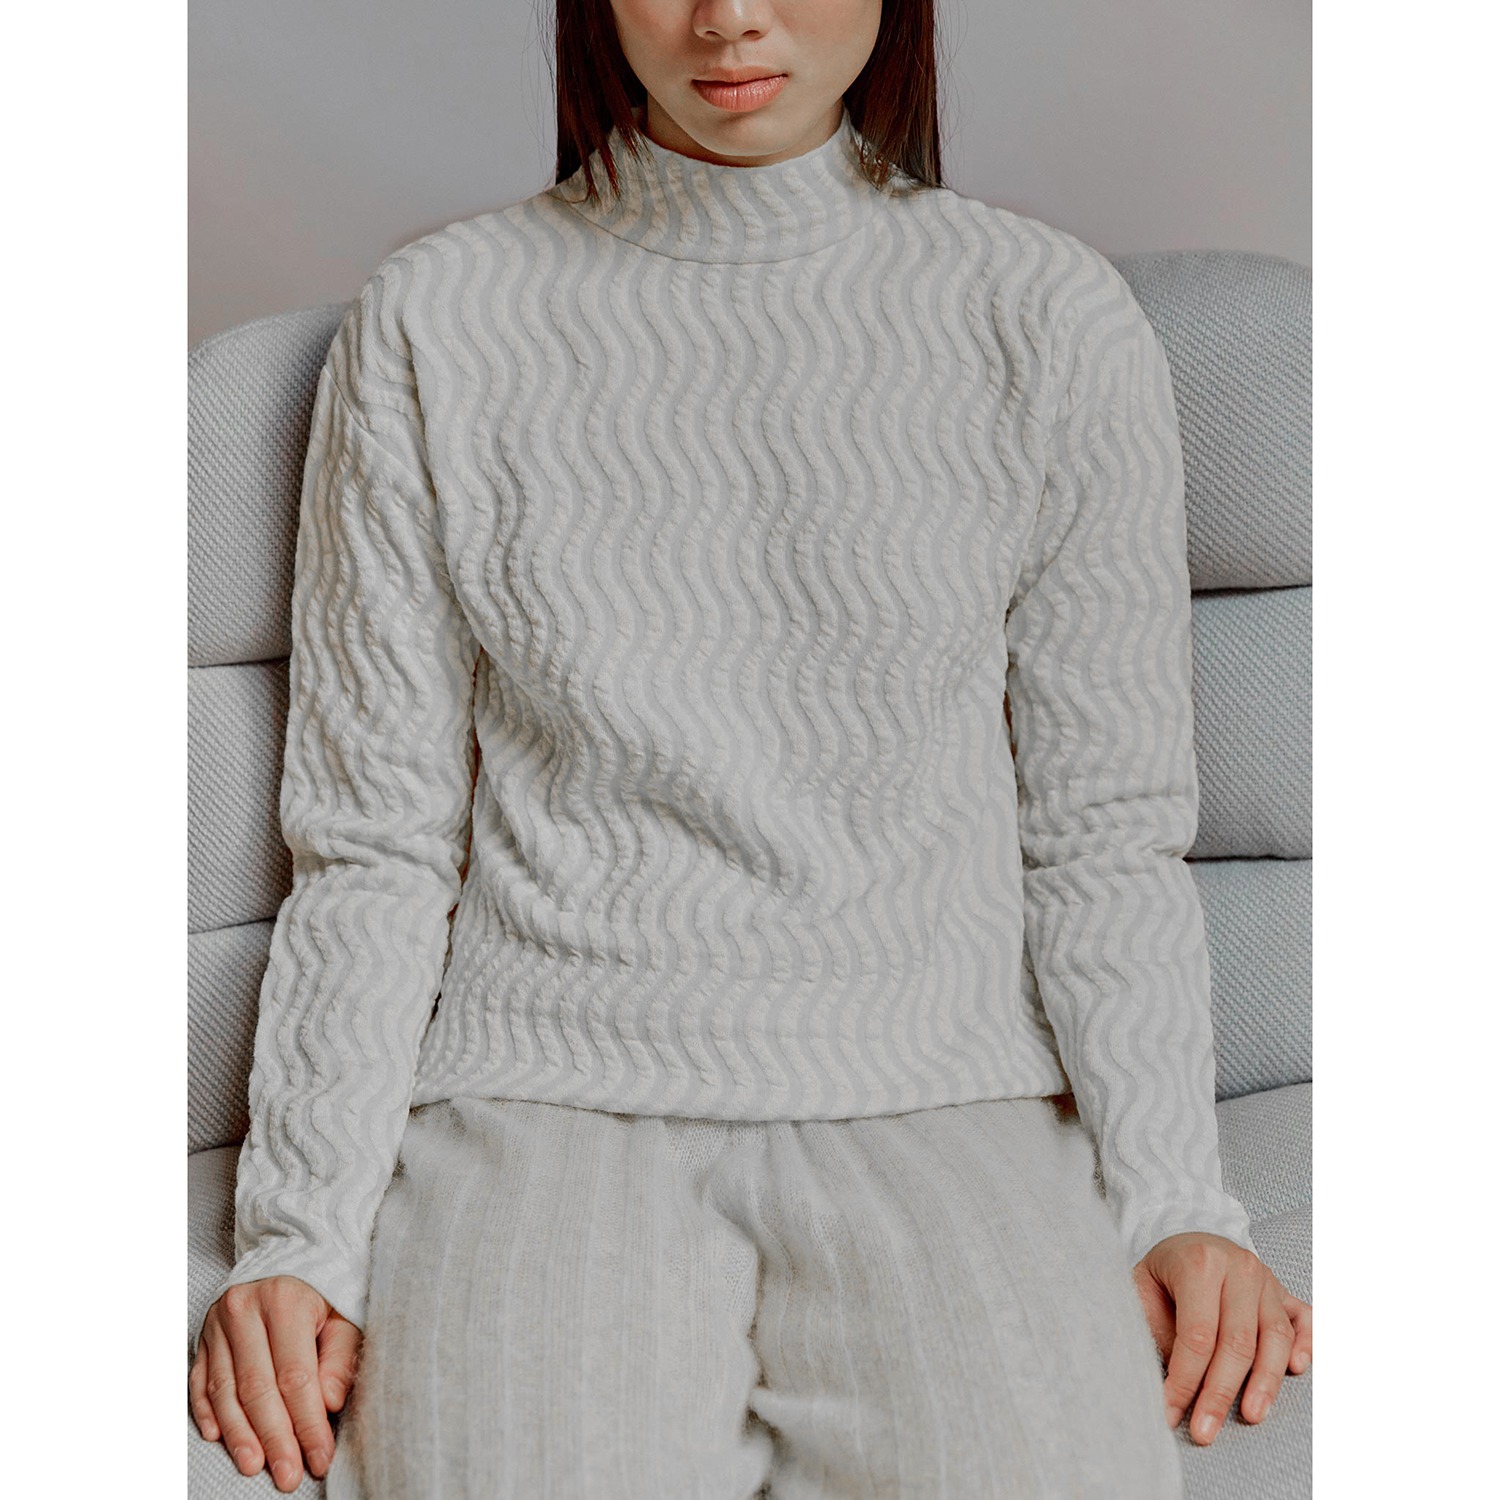 ﻿Jacquard Wave Textured Sweater